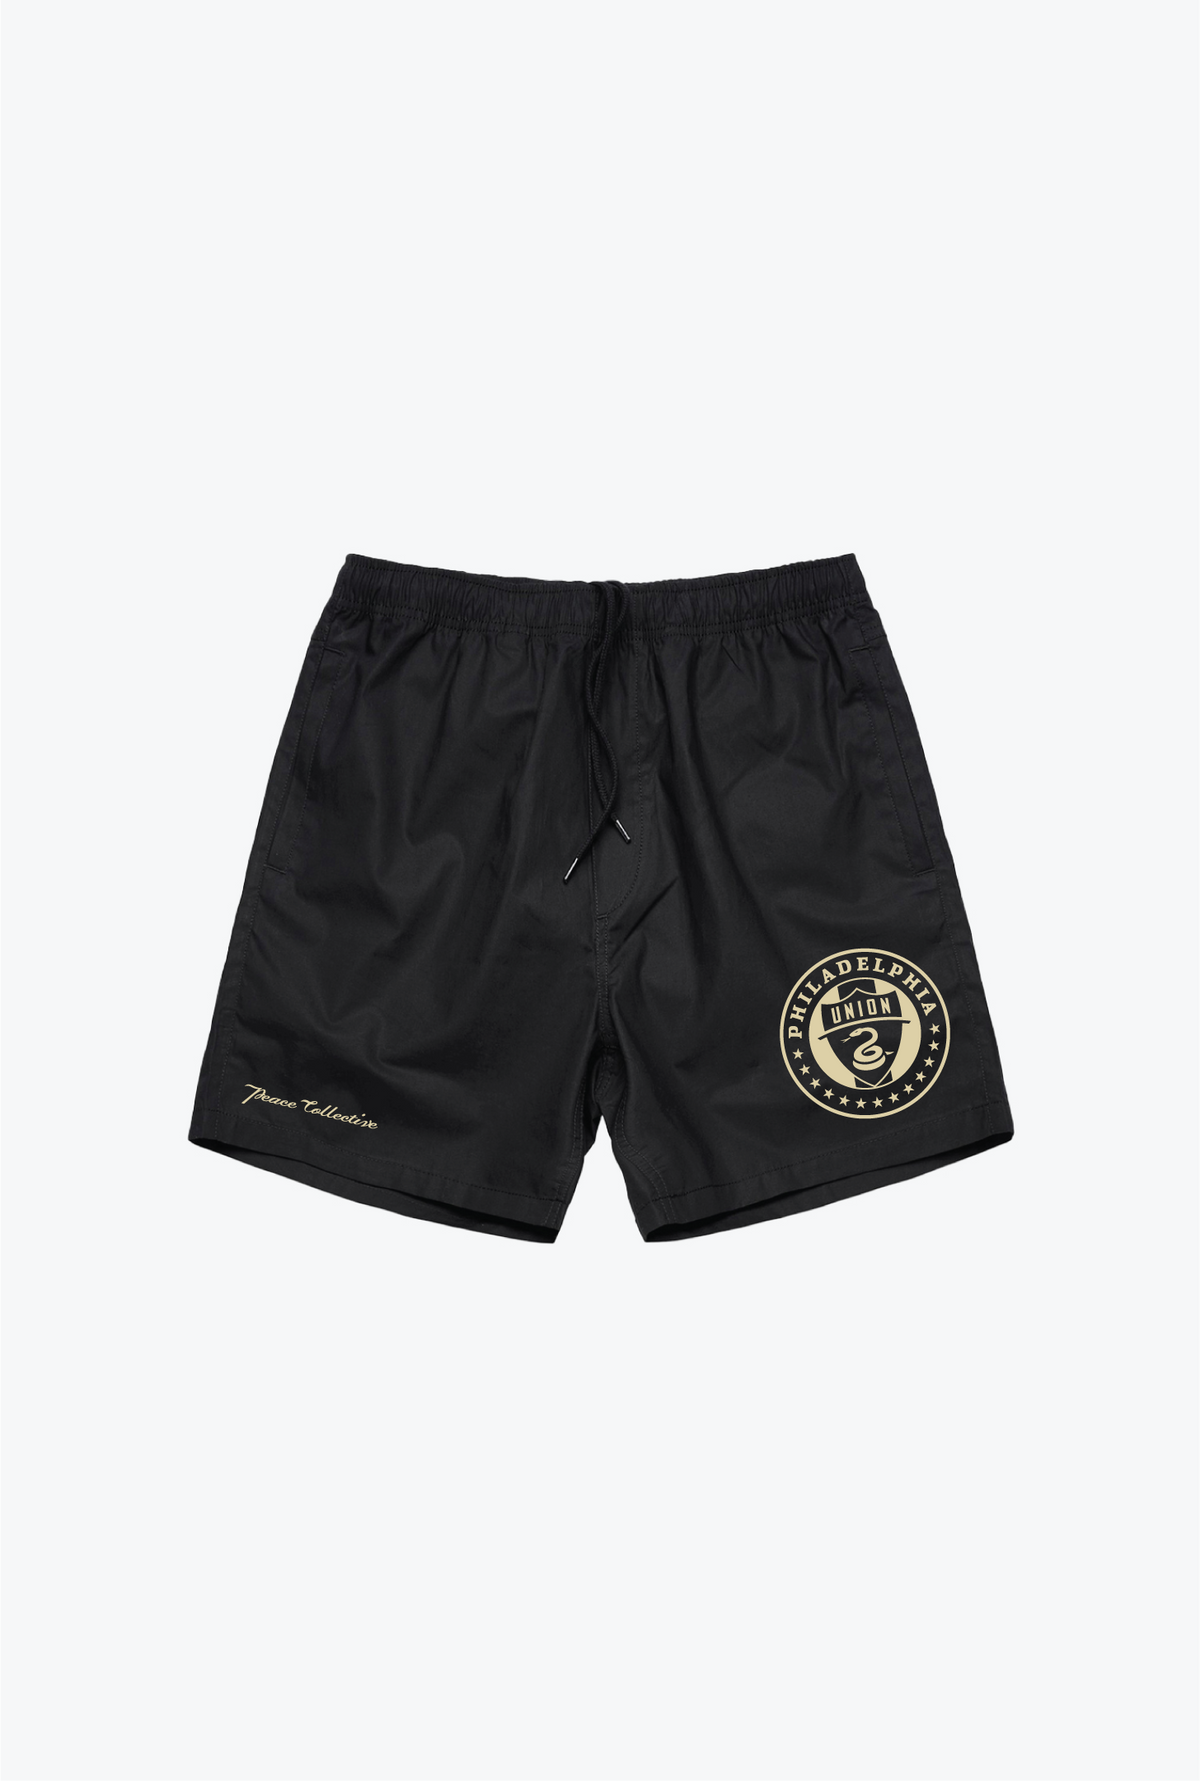 Philadelphia Union Board Shorts - Black